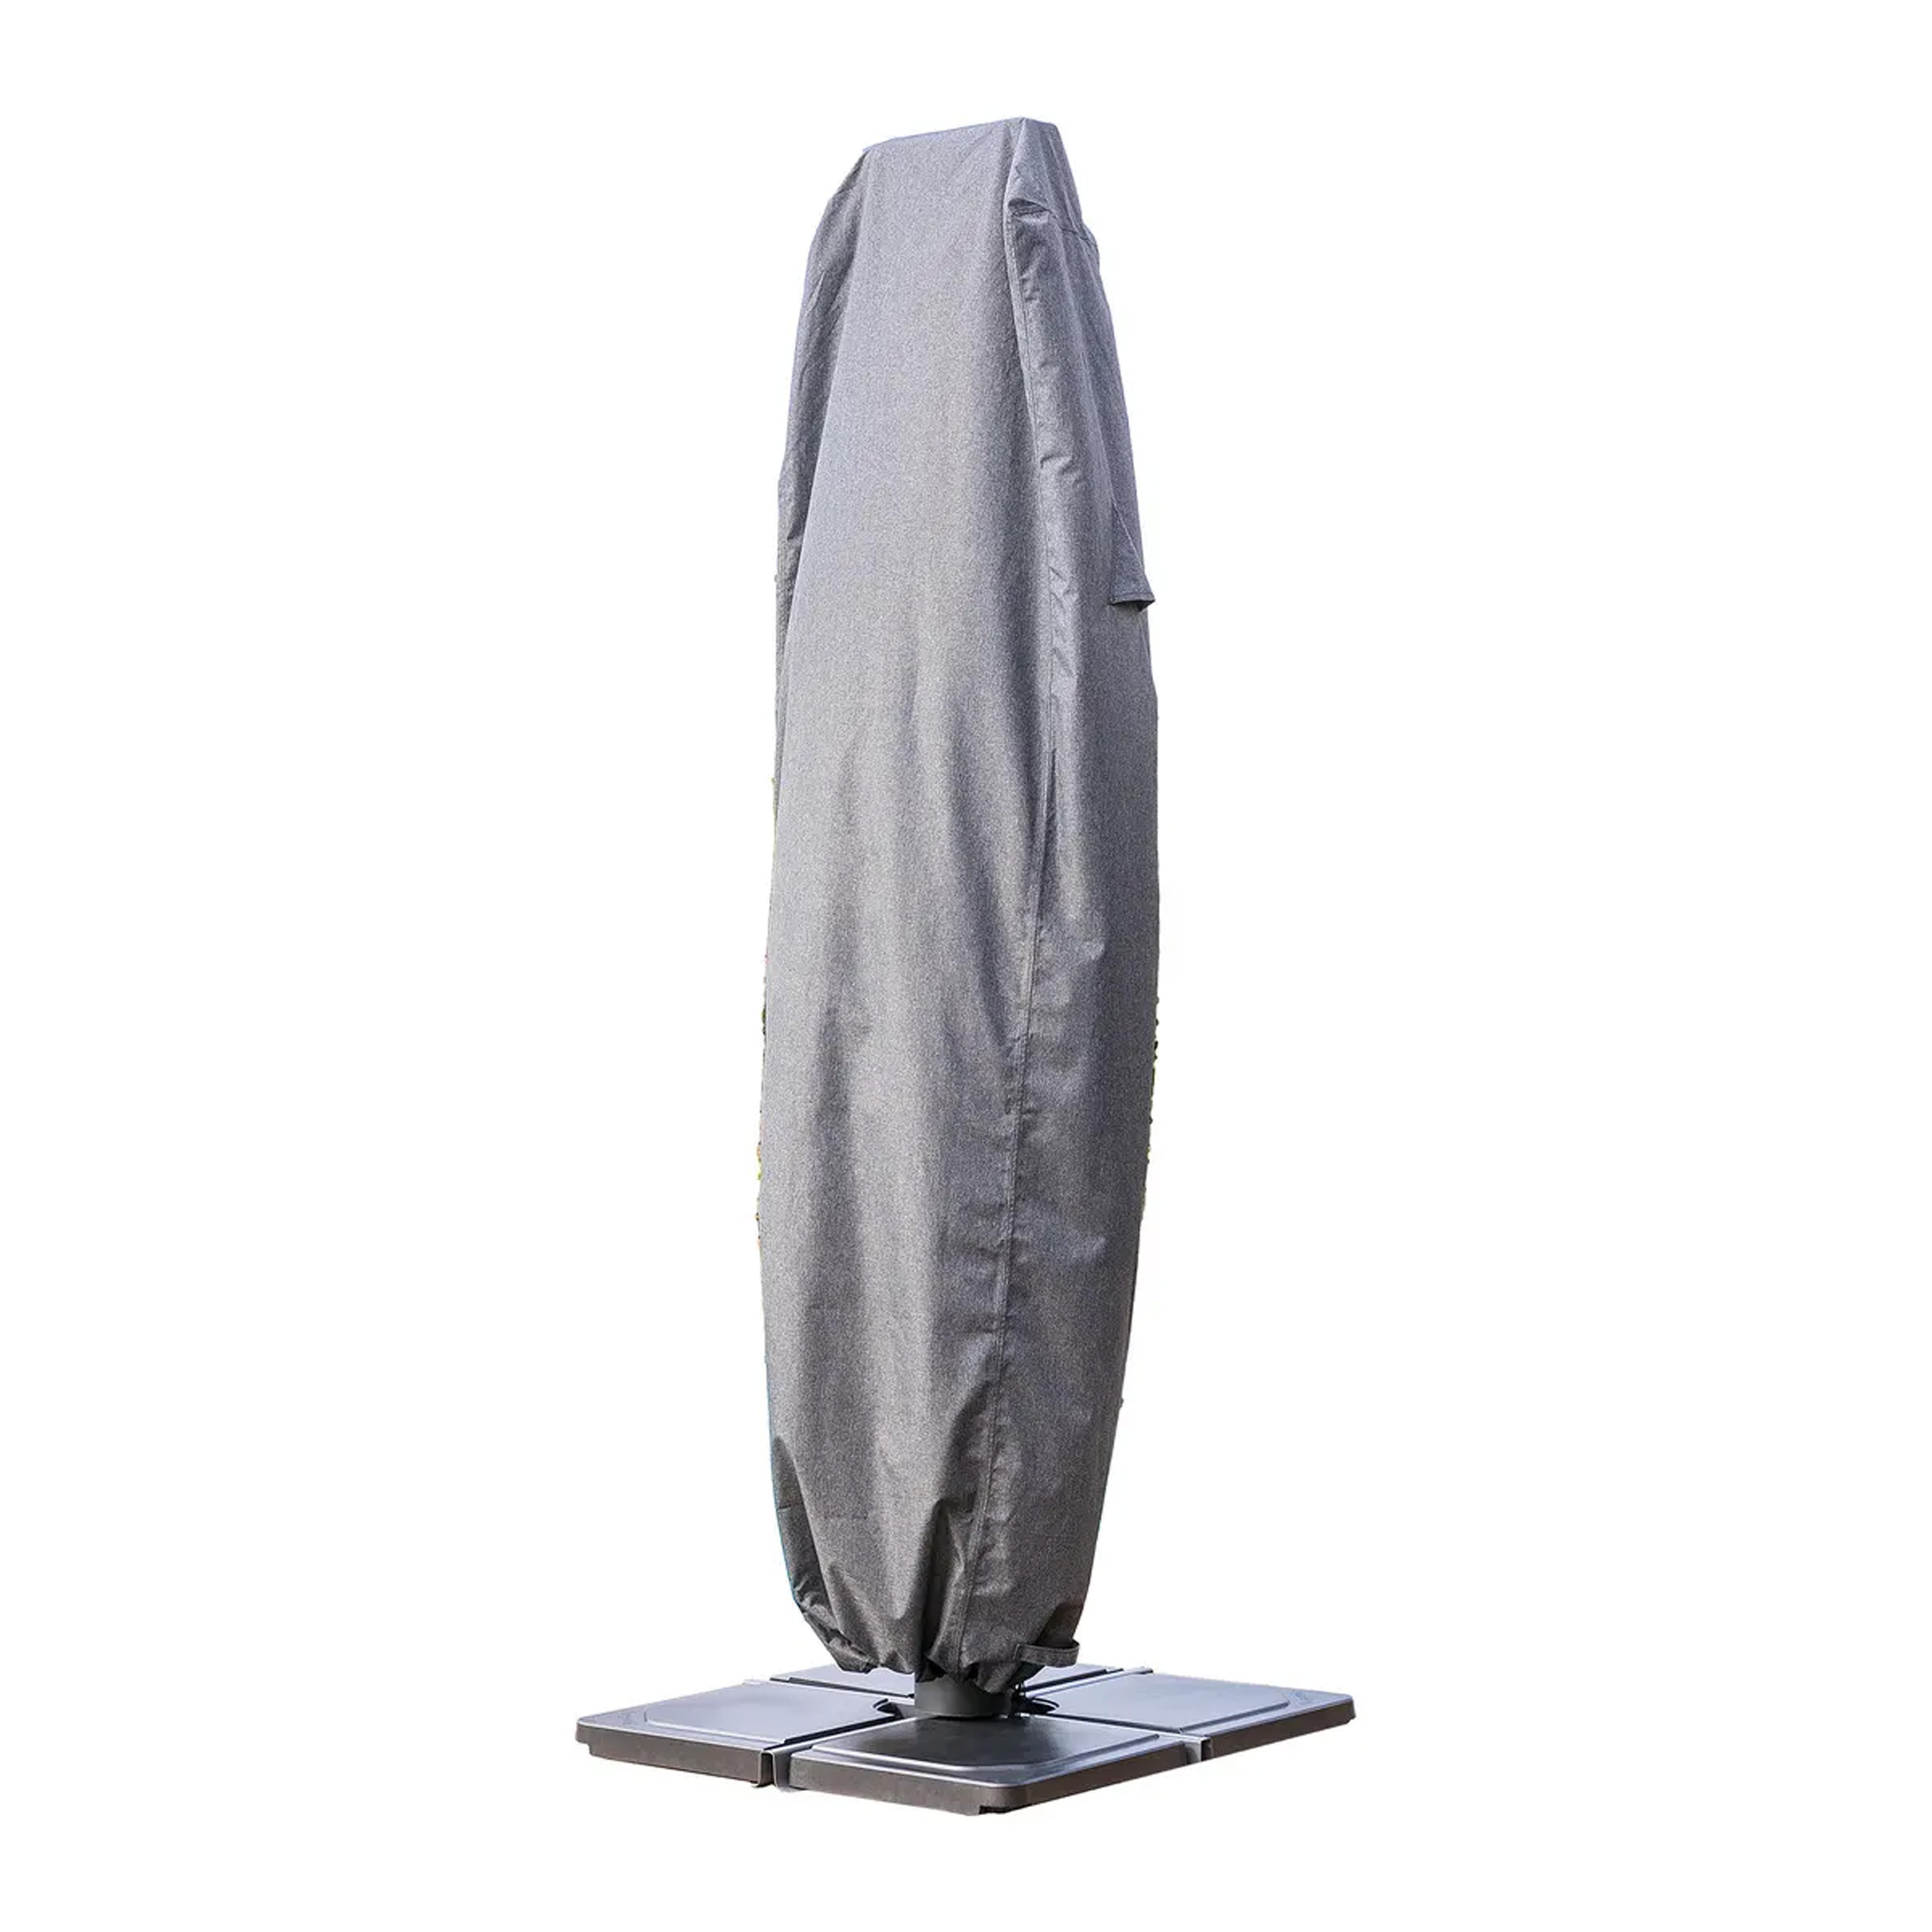 Hesperide Parasol Beschermhoes Hambo grijs polyester waterafstotend 30 x 60 x 210 cm